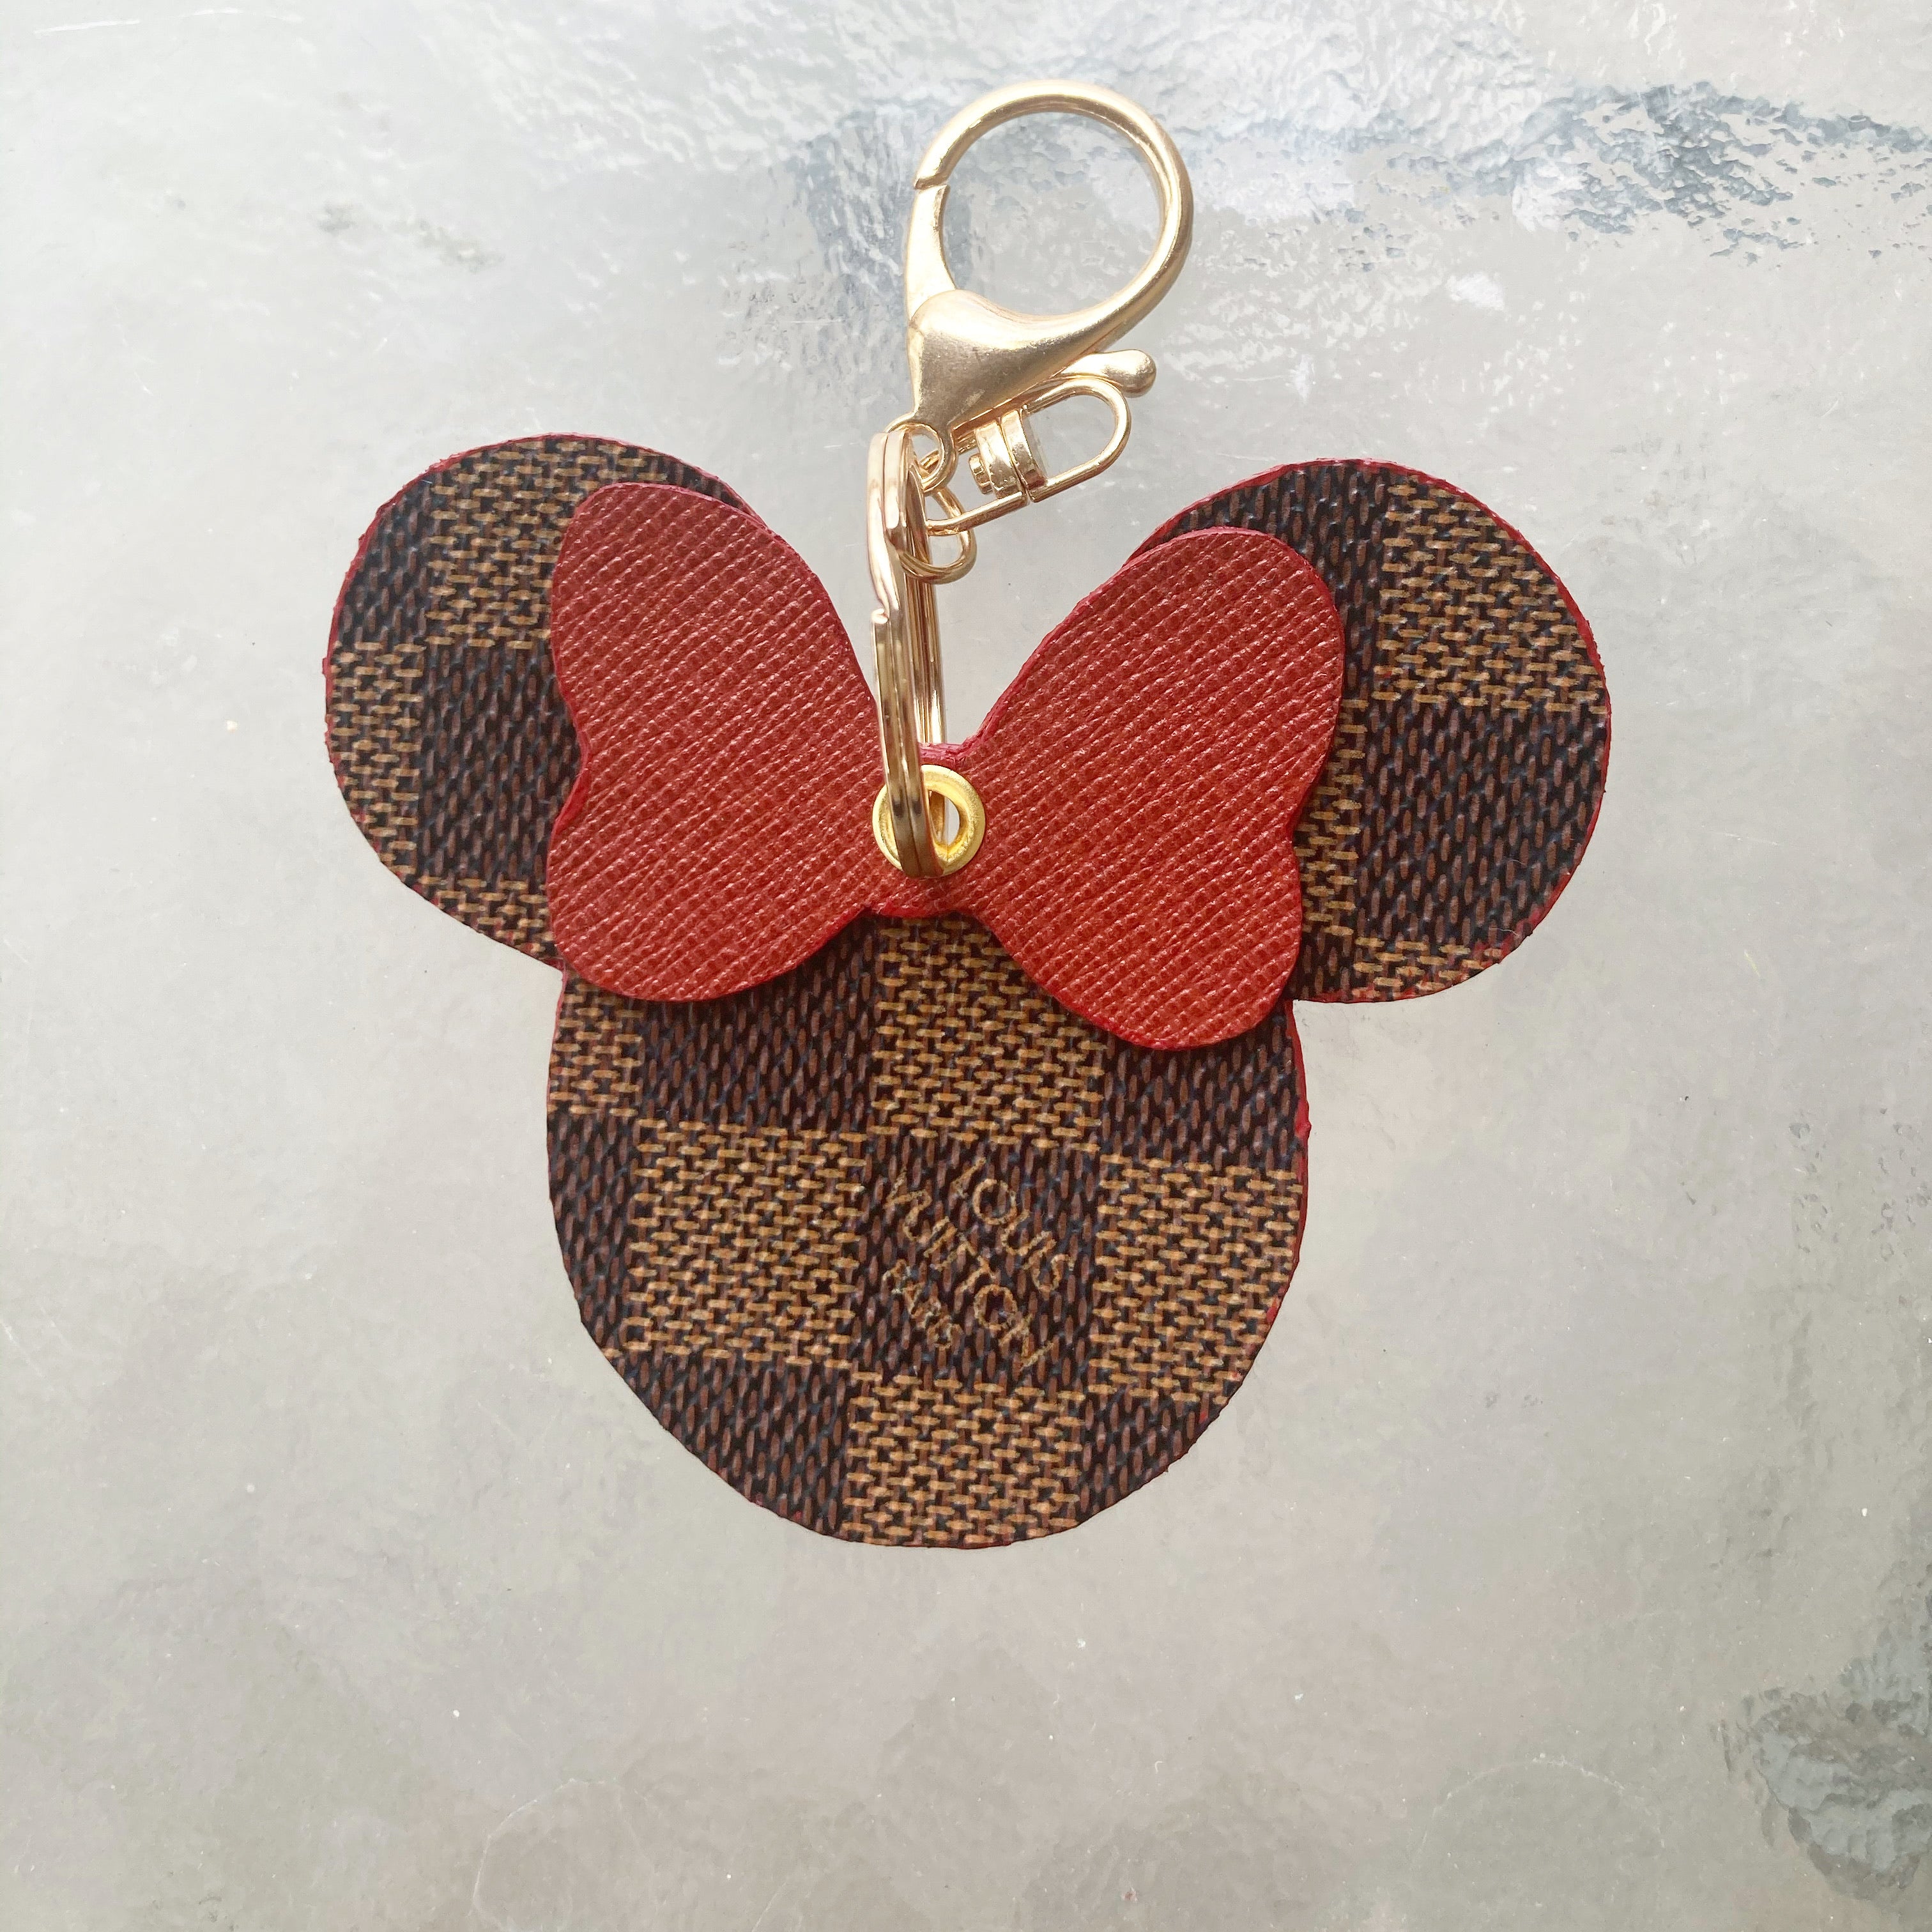 Mickey Mouse Louis Vuitton -  UK